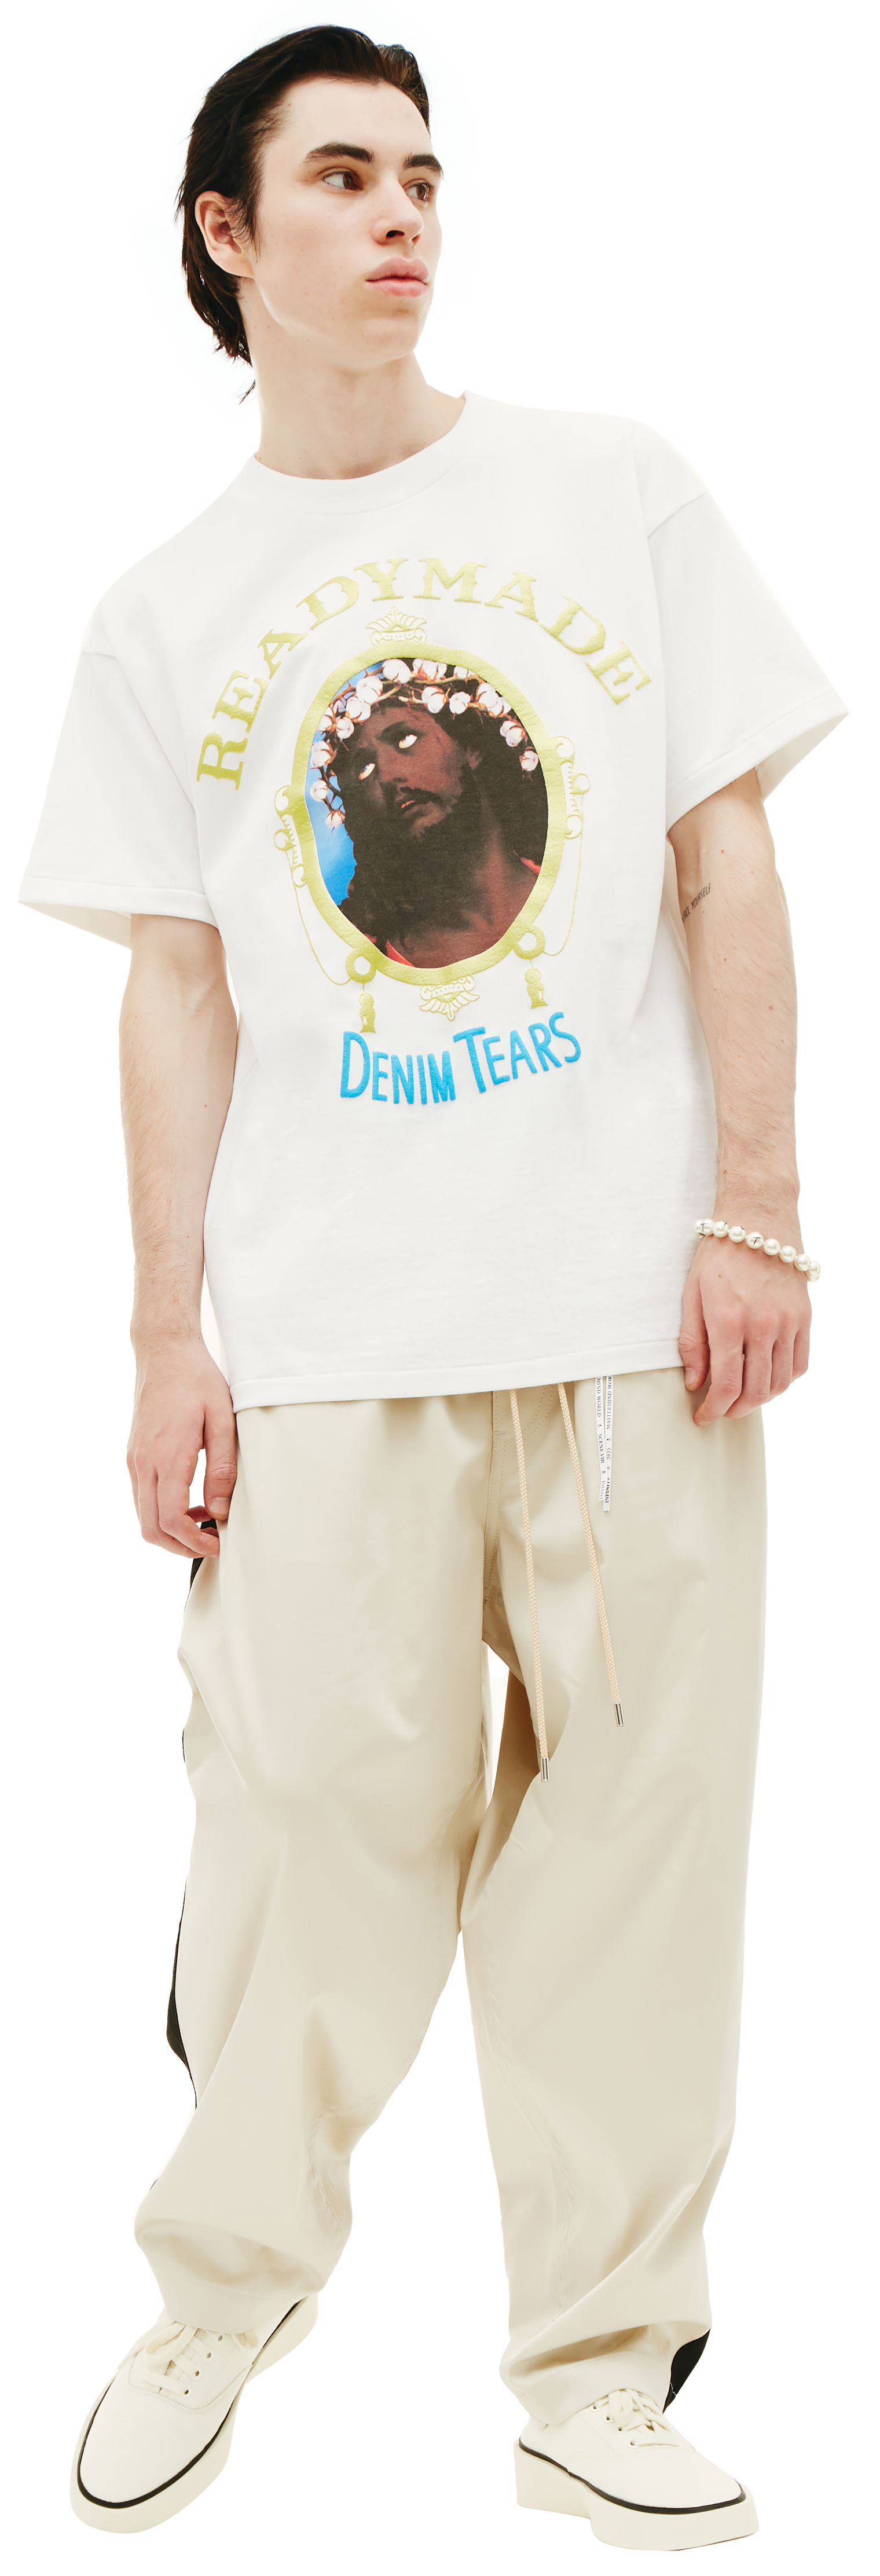 Readymade Denim Tears x Readymade printed t-shirt